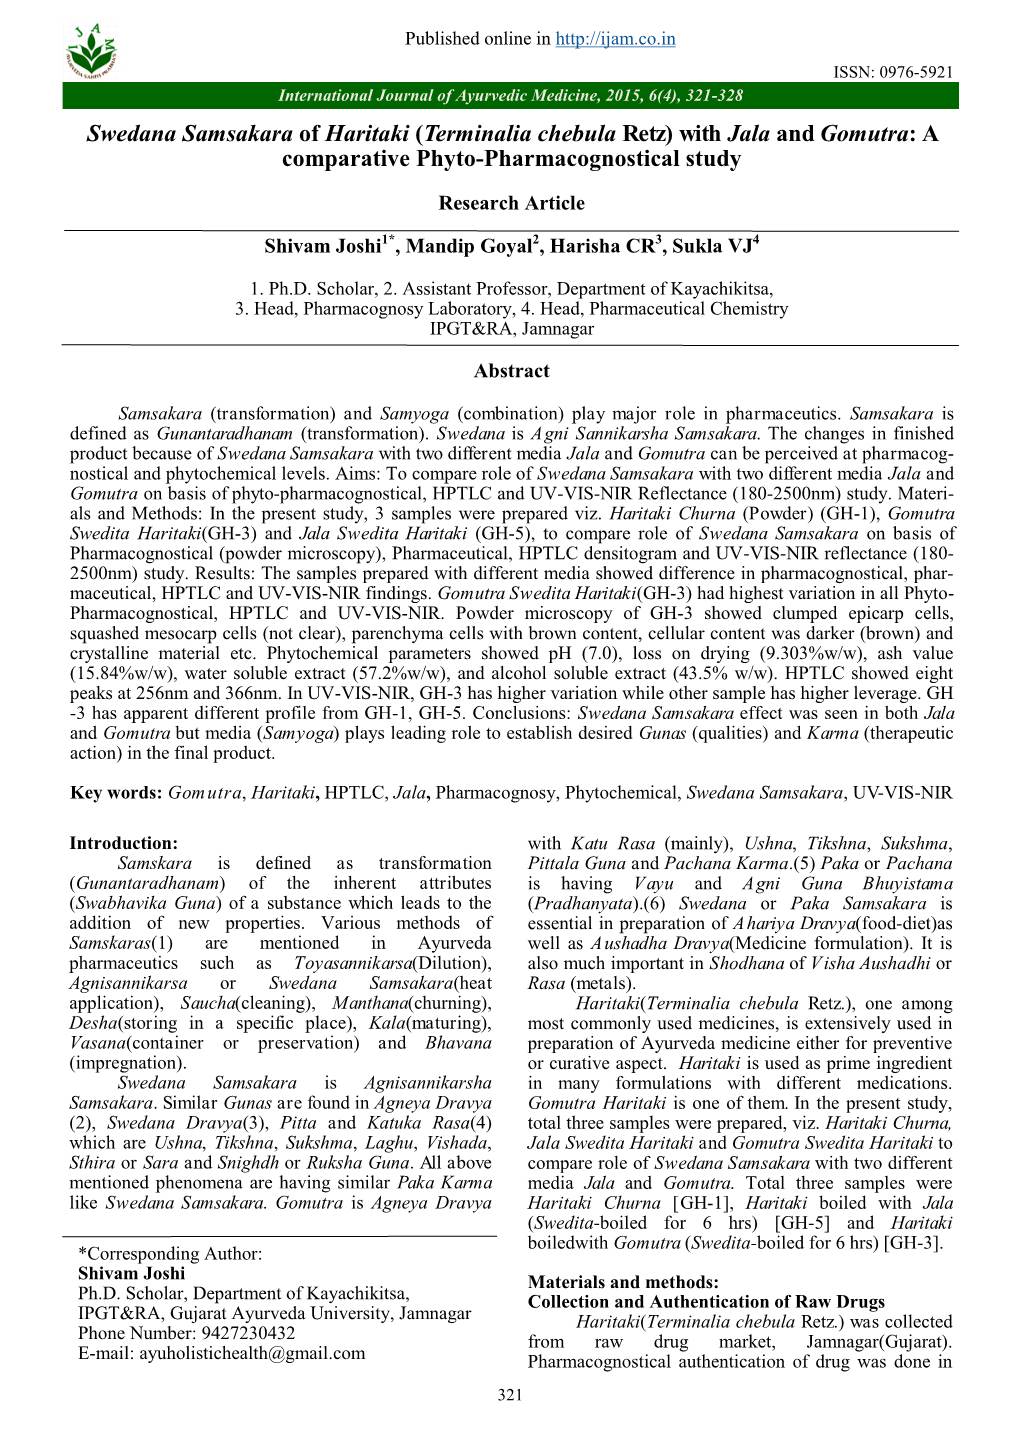 Swedana Samsakara of Haritaki (Terminalia Chebula Retz) with Jala and Gomutra: a Comparative Phyto-Pharmacognostical Study